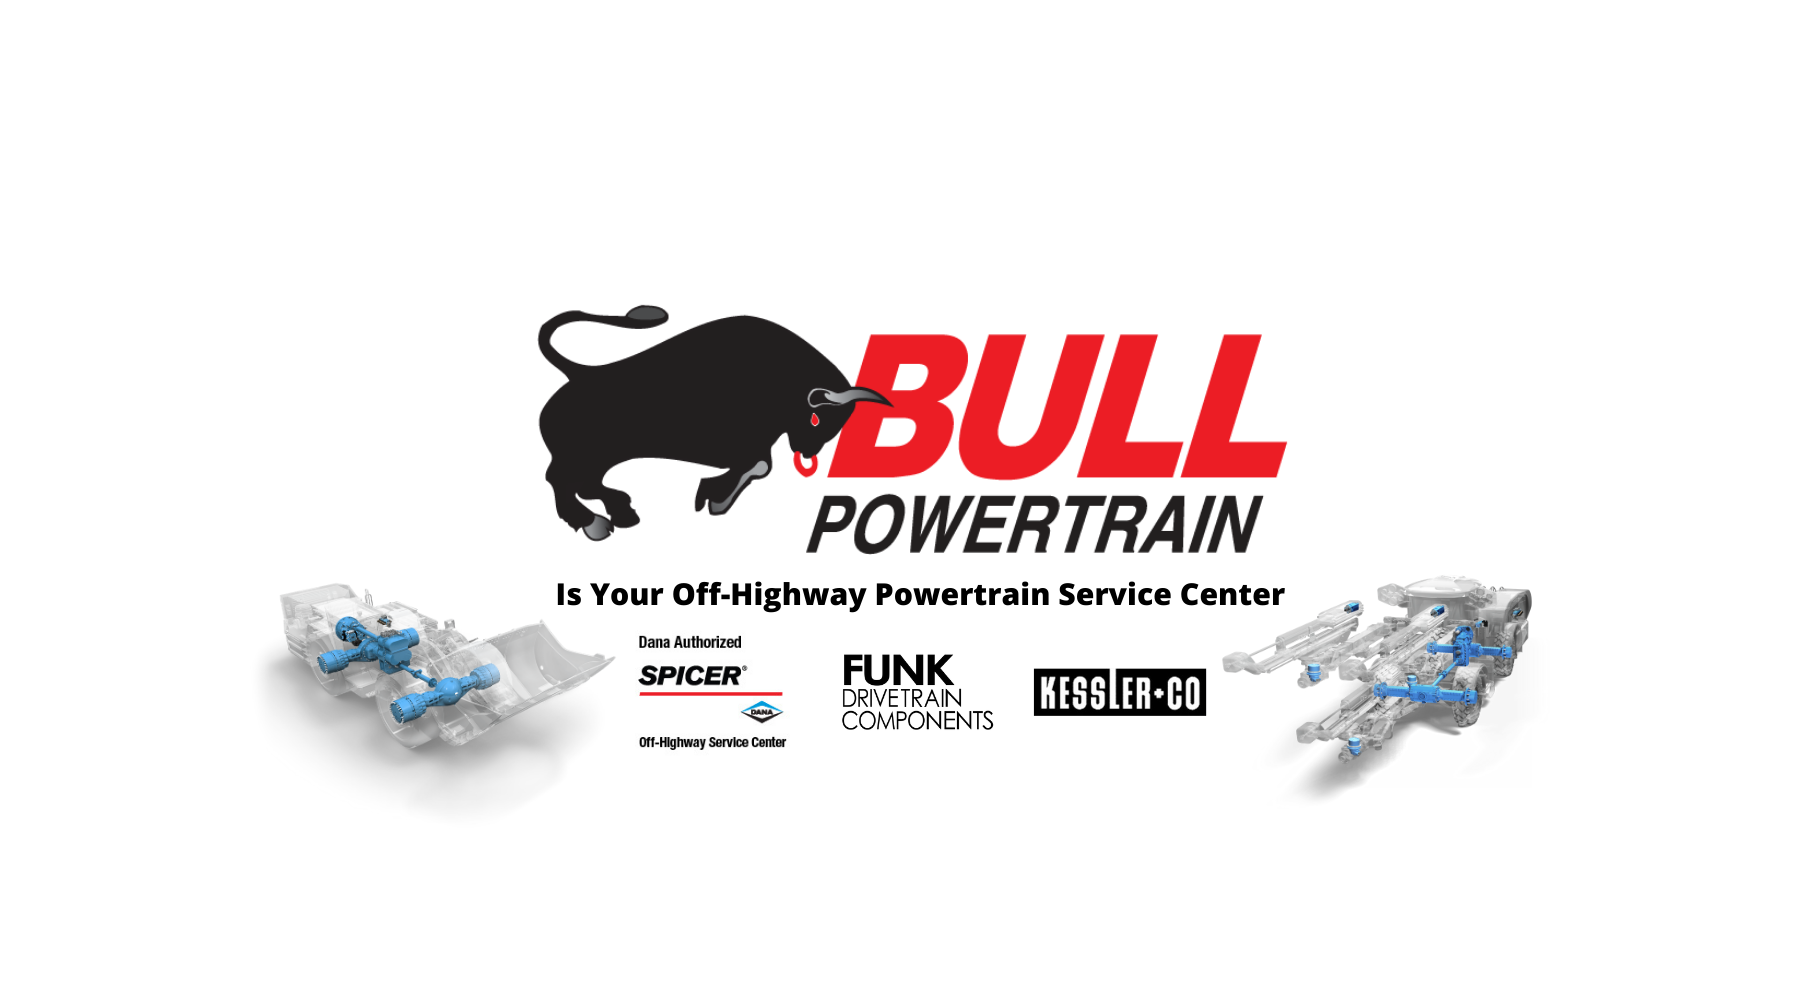 Bull Powertrain: Your Off-Highway Powertrain Service Center